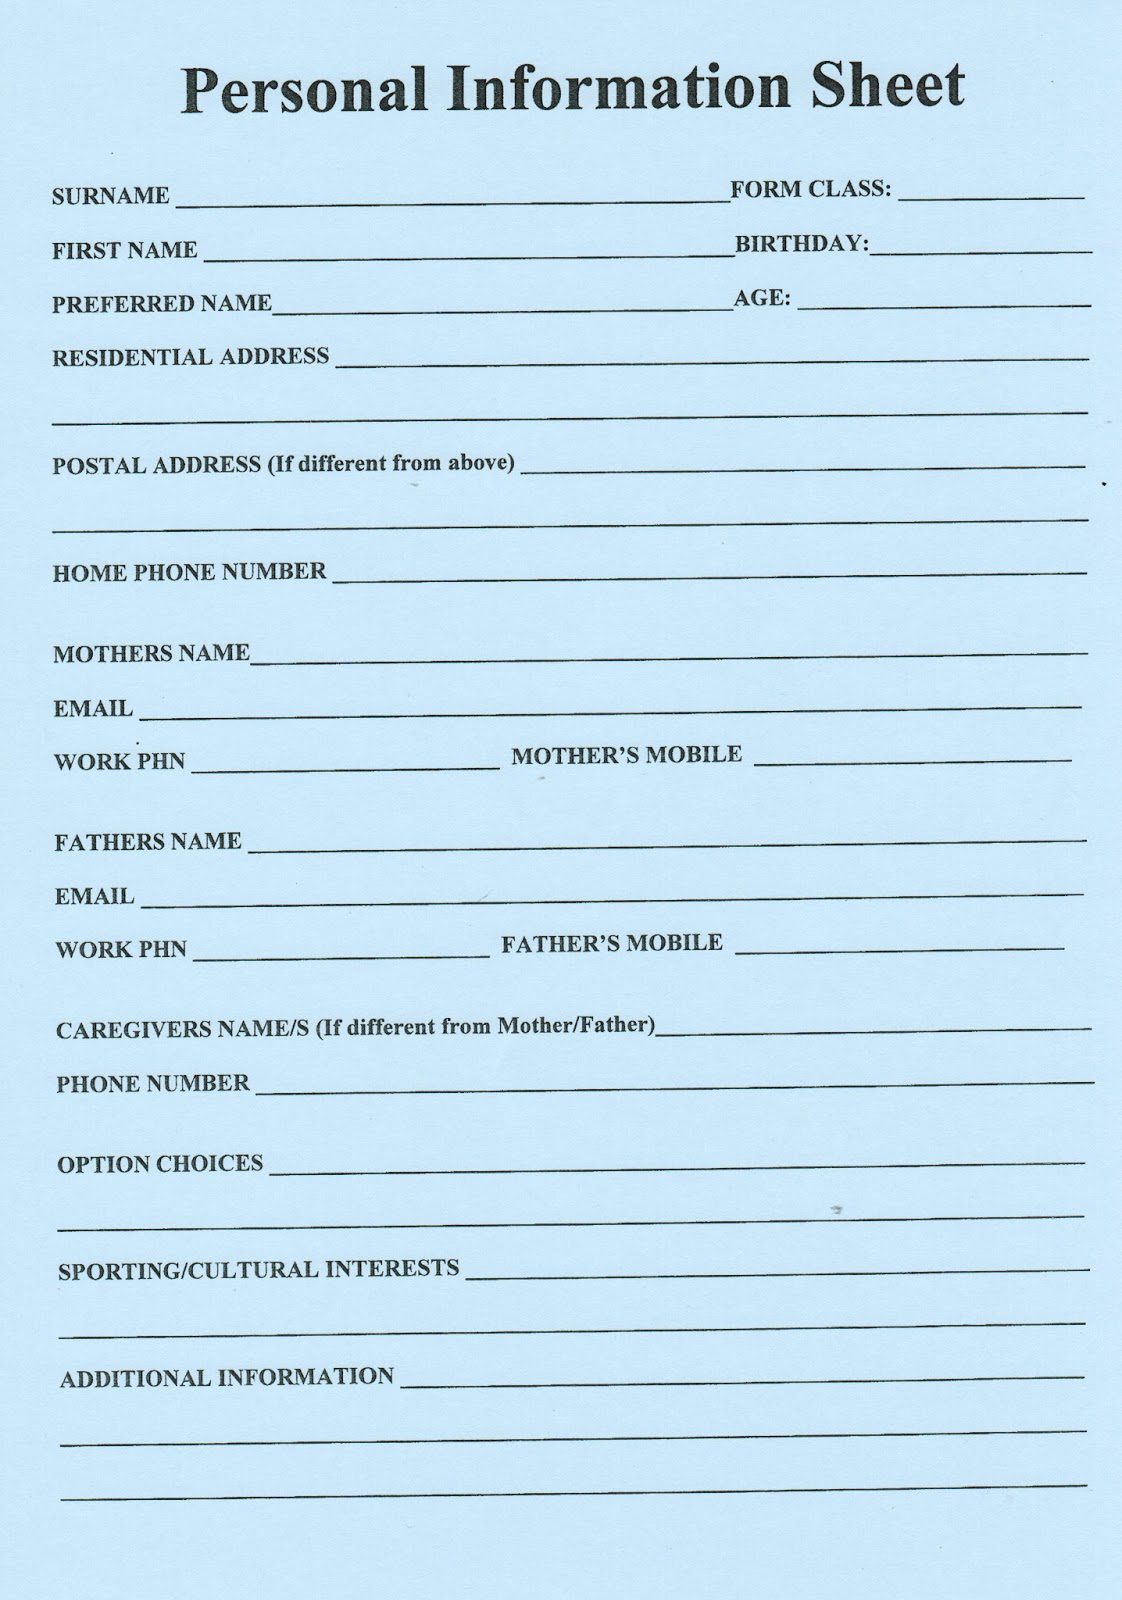 Personal Information Sheet